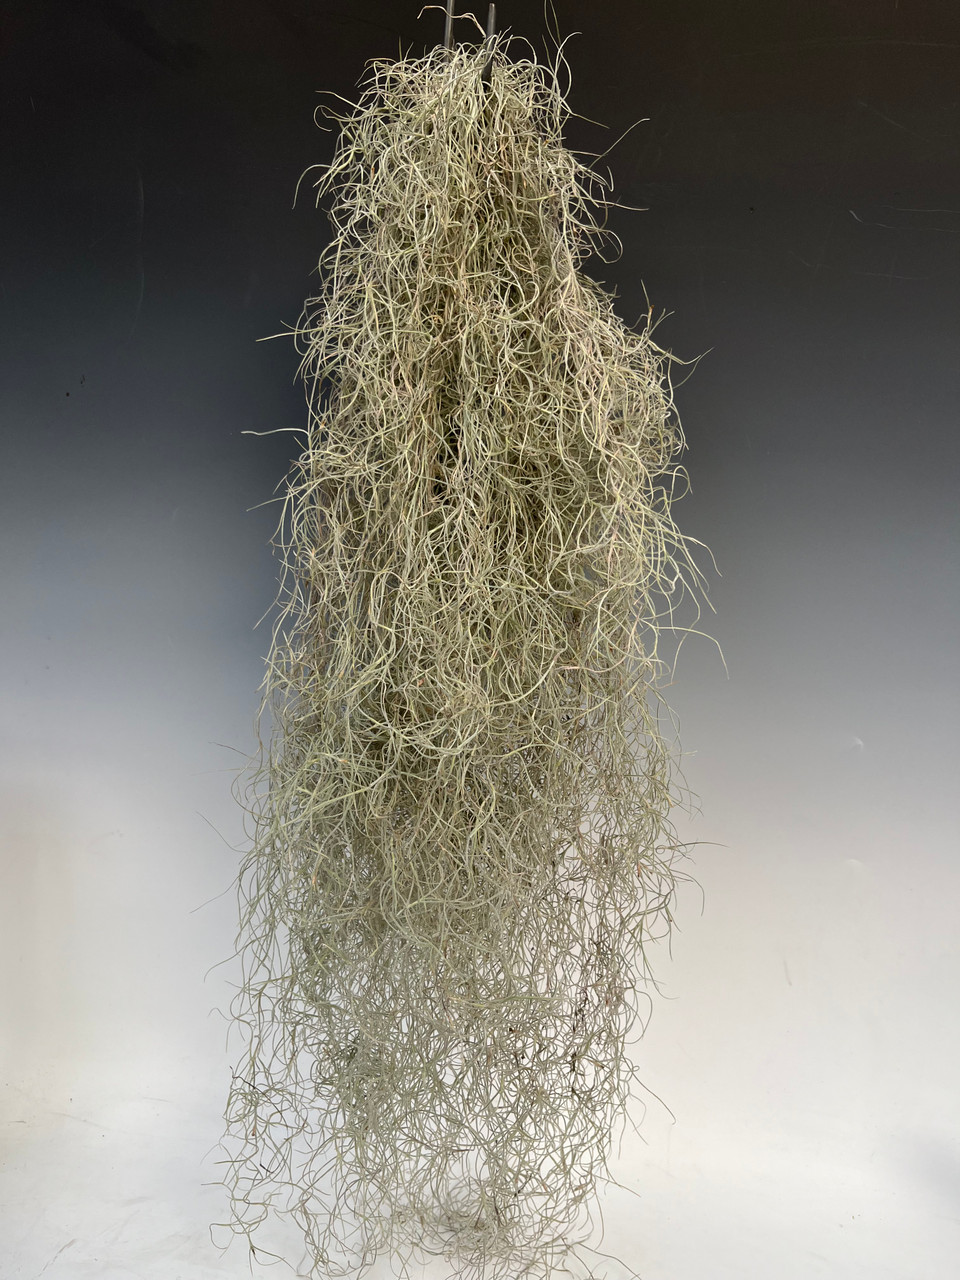 Spanish moss care & info, Tillandsia usneoides